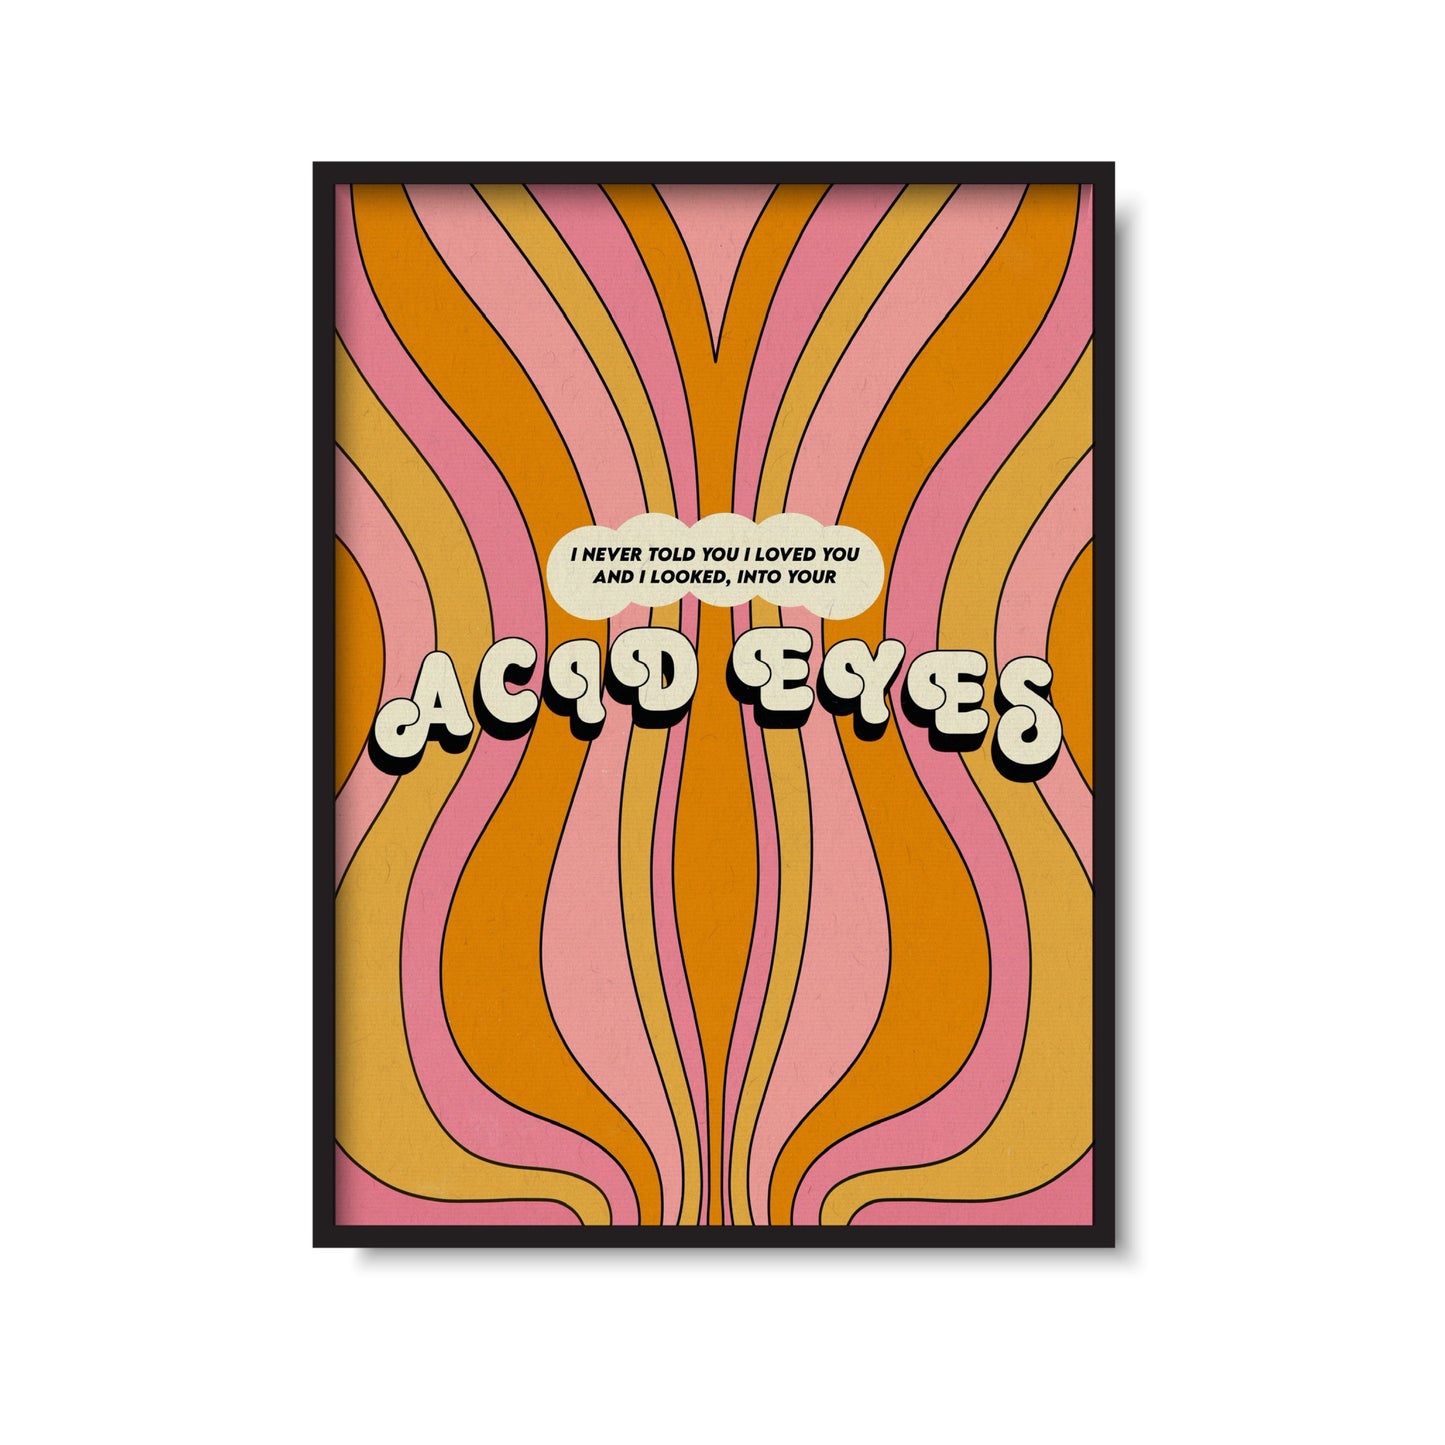 Acid Eyes Print